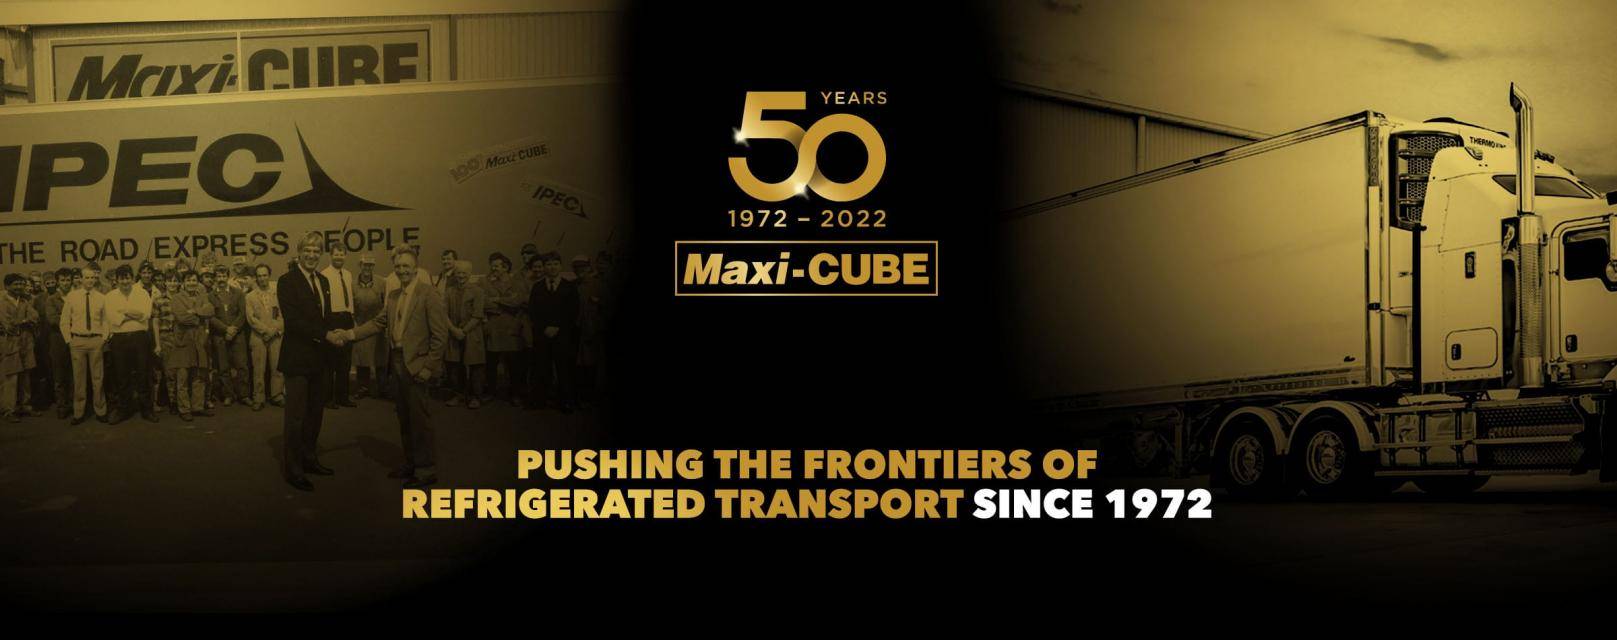 50 years maxi-cube